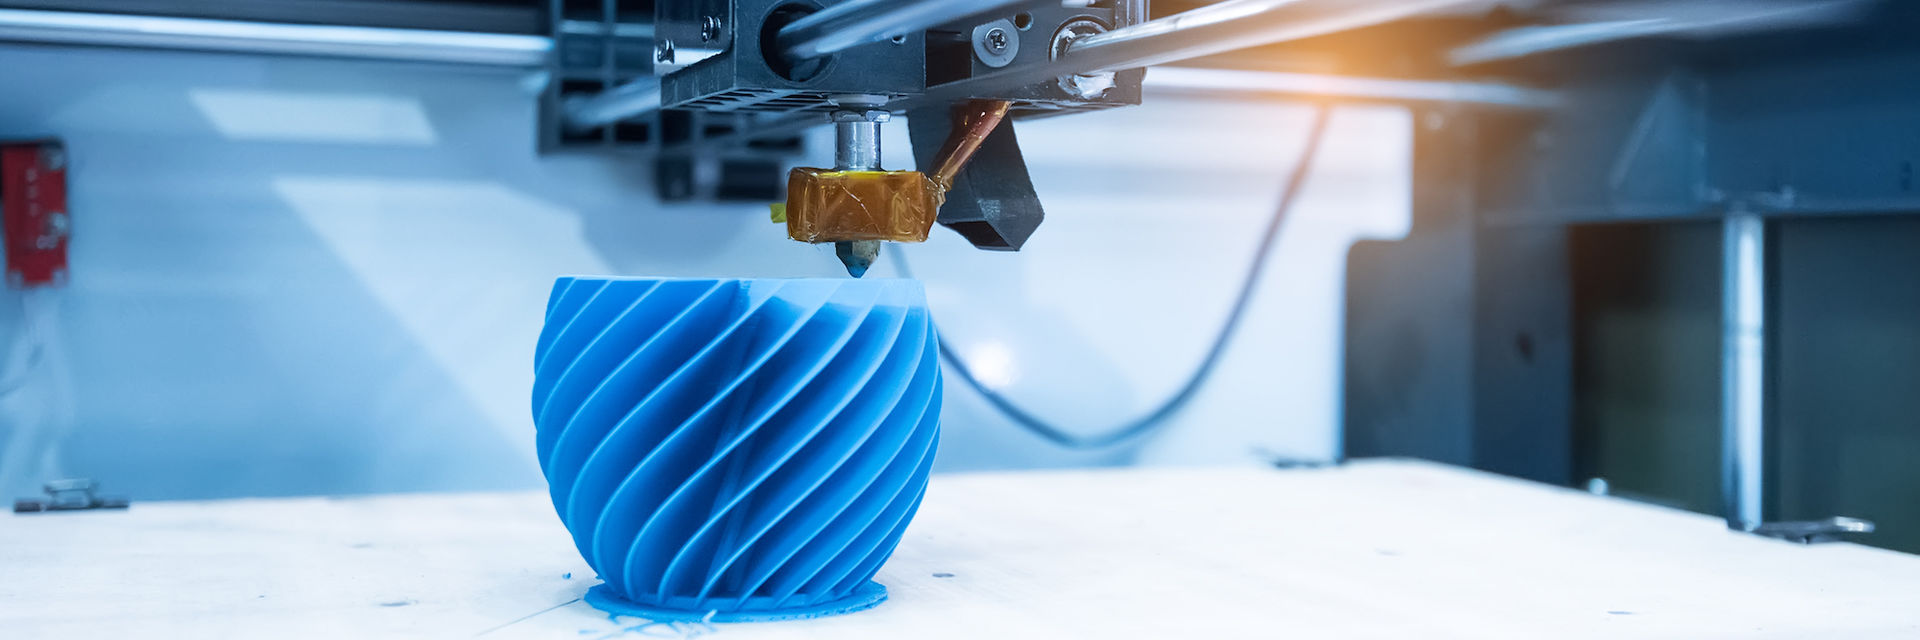 ODIN 3D printer in operation